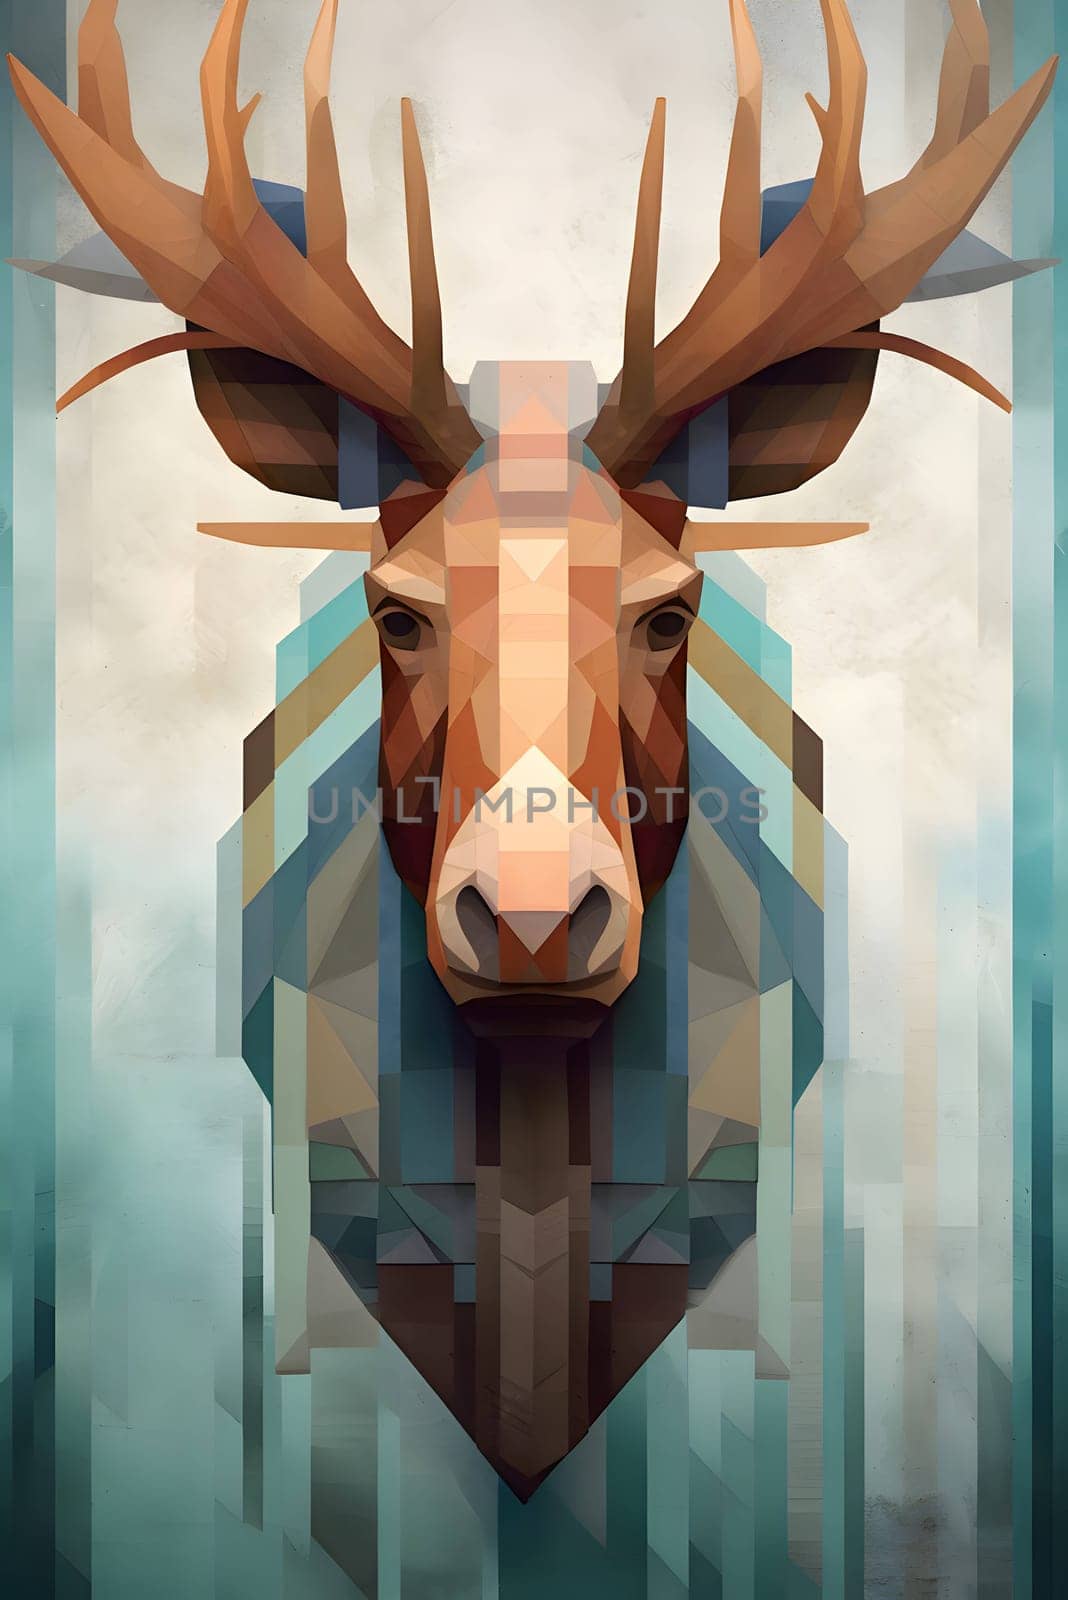 Abstract illustration: Abstract polygonal deer head on abstract background. Vector illustration.